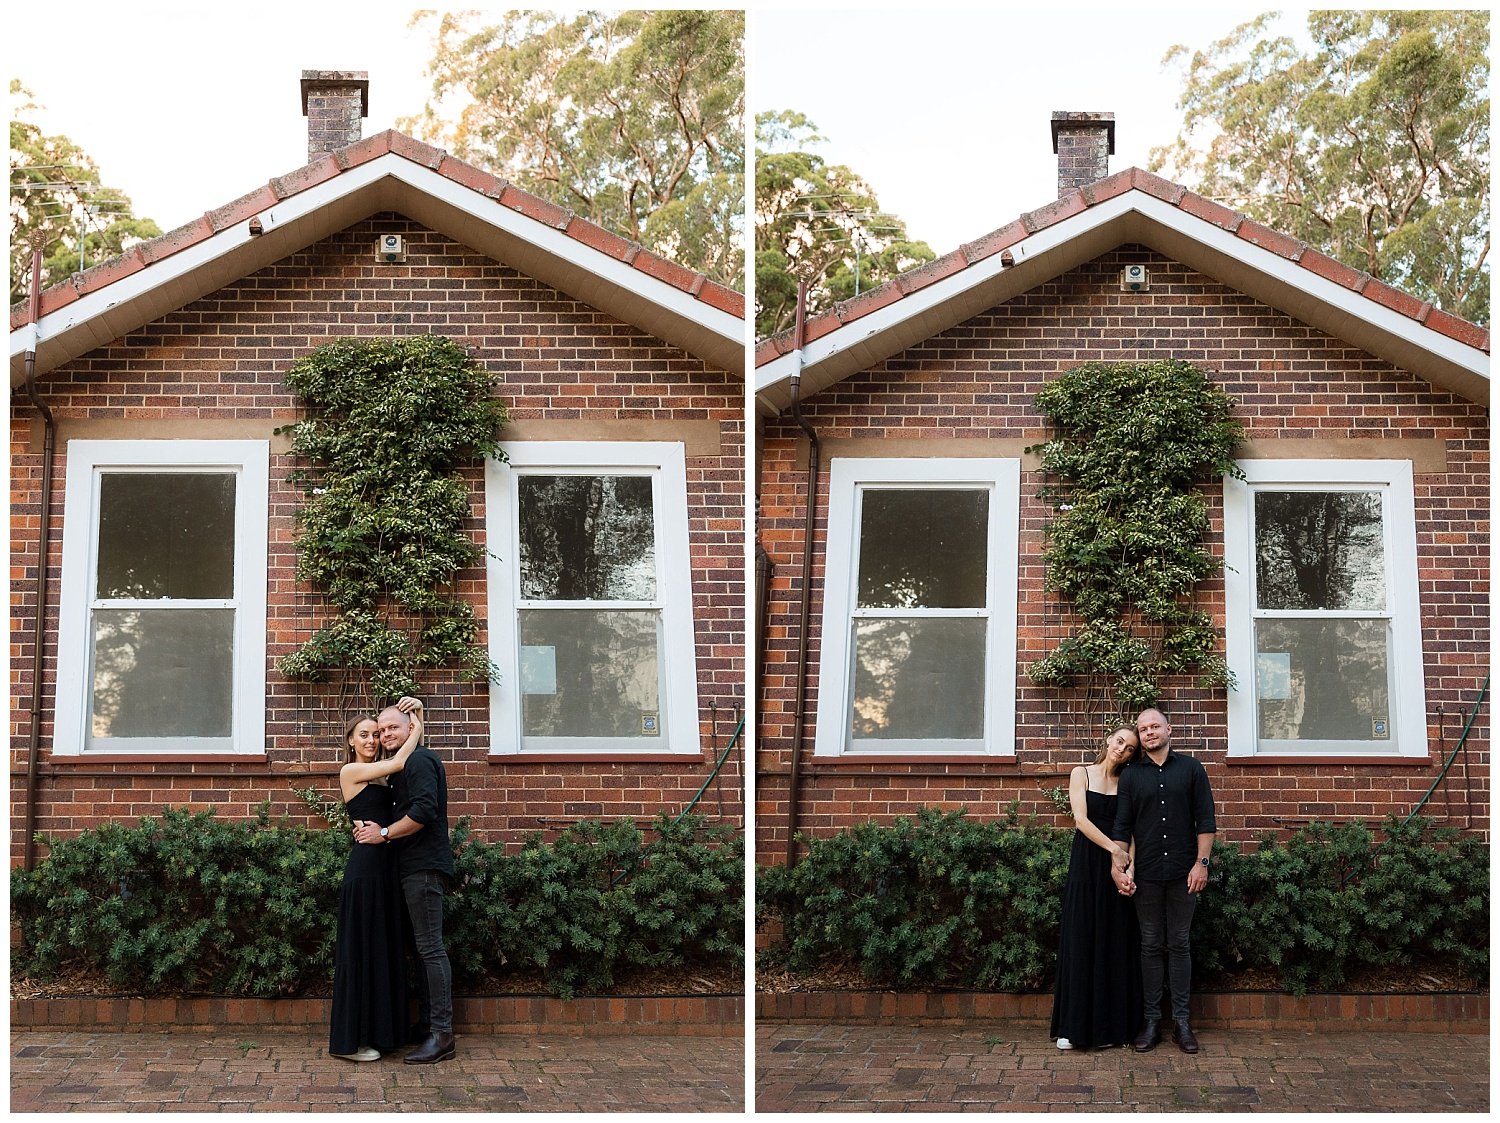 Gold-coast-wedding-photographer-captures-garden-engagement-session-in-Toowoomba